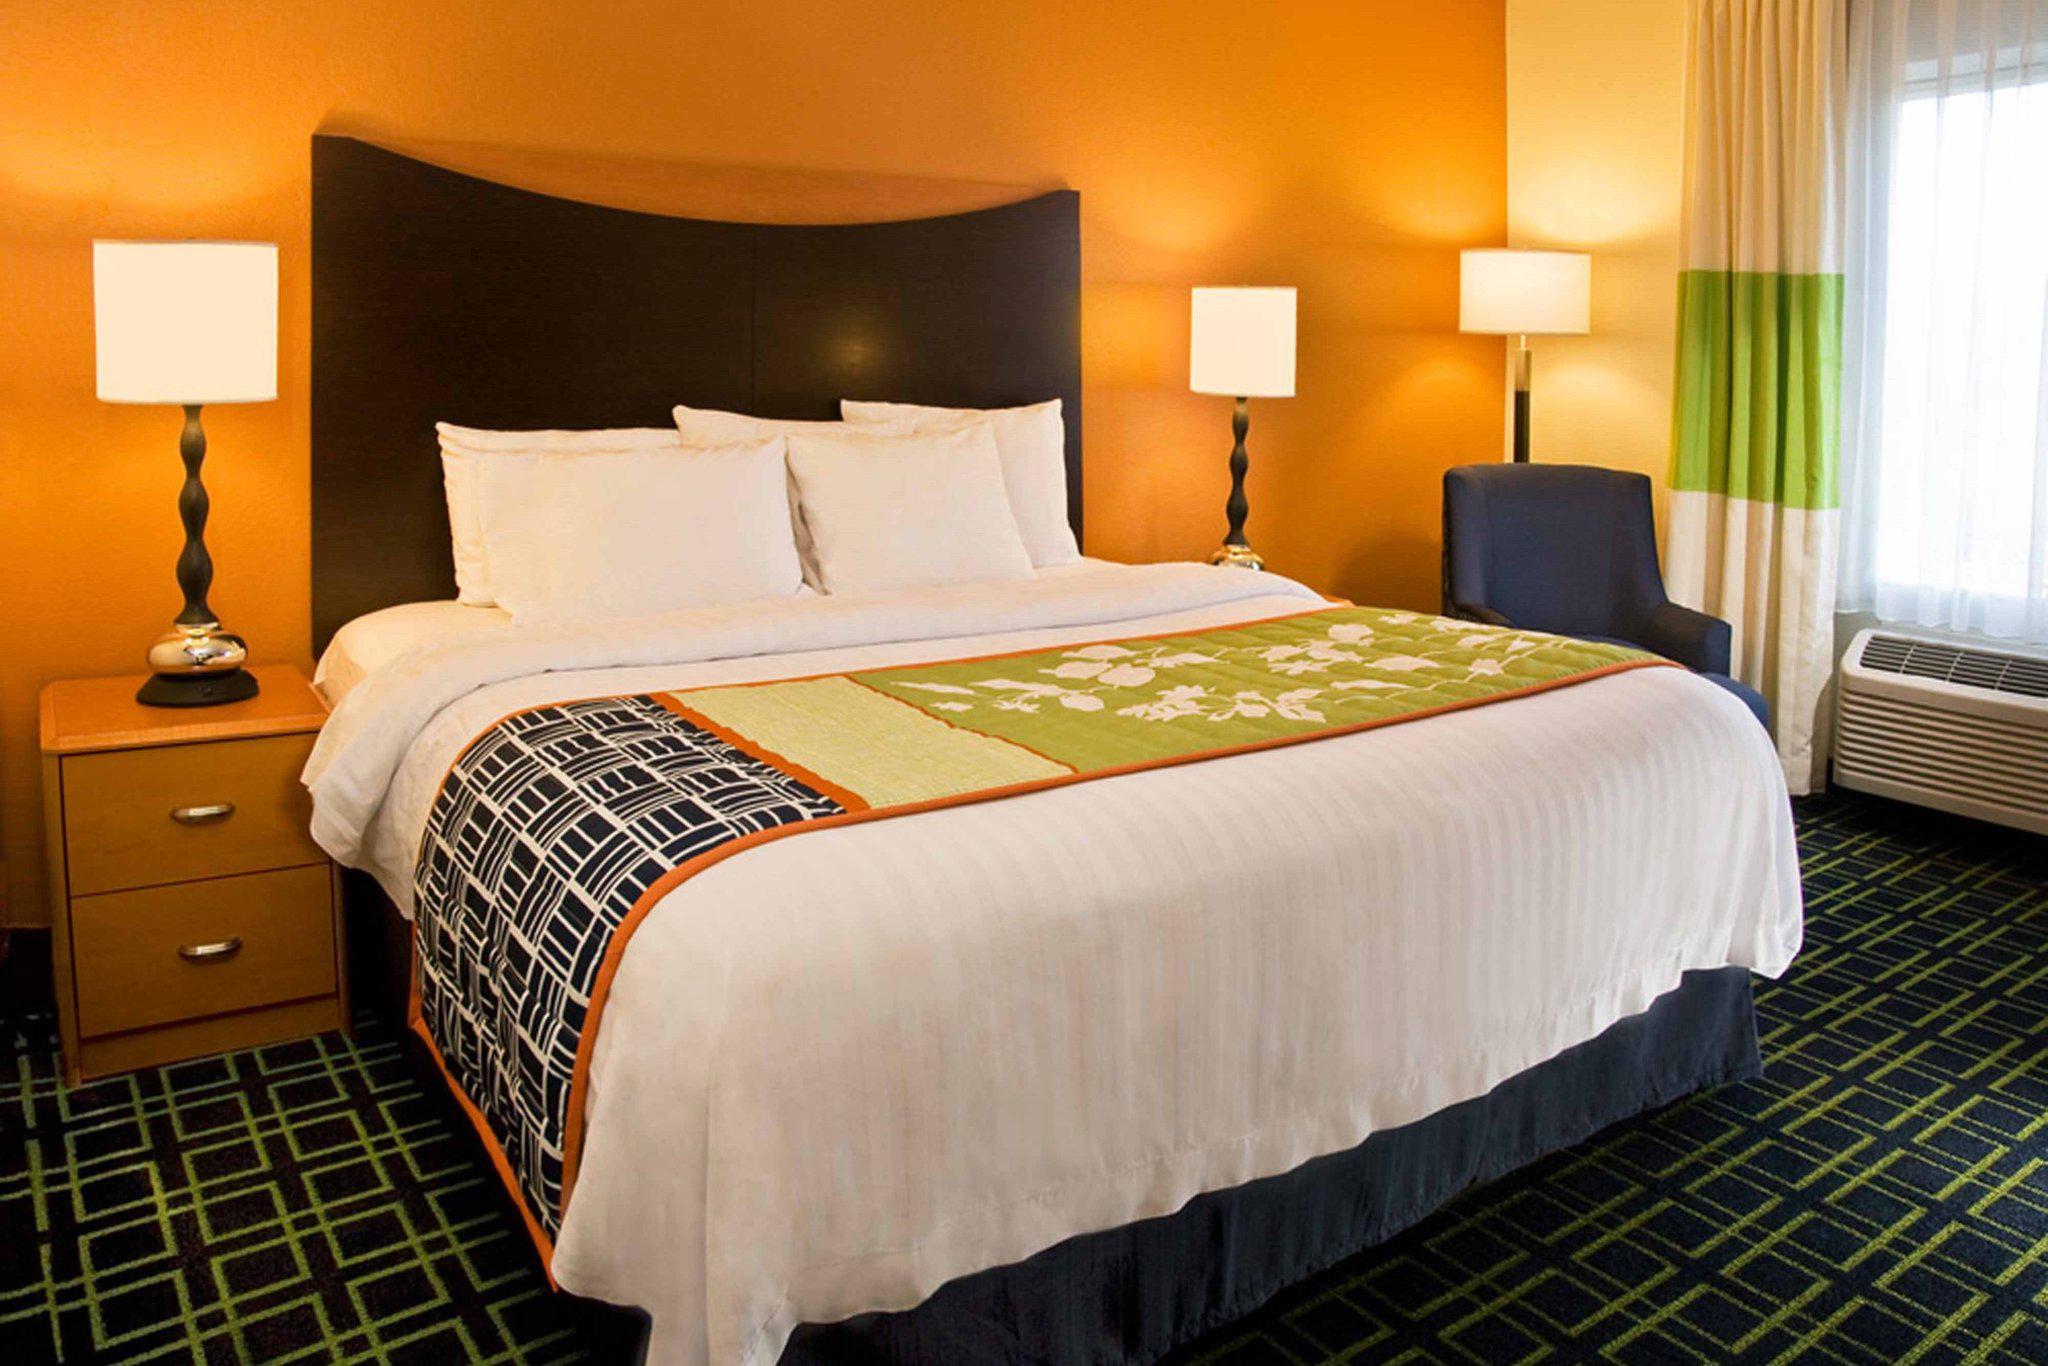 Fairfield Inn & Suites by Marriott Spokane Downtown Photo